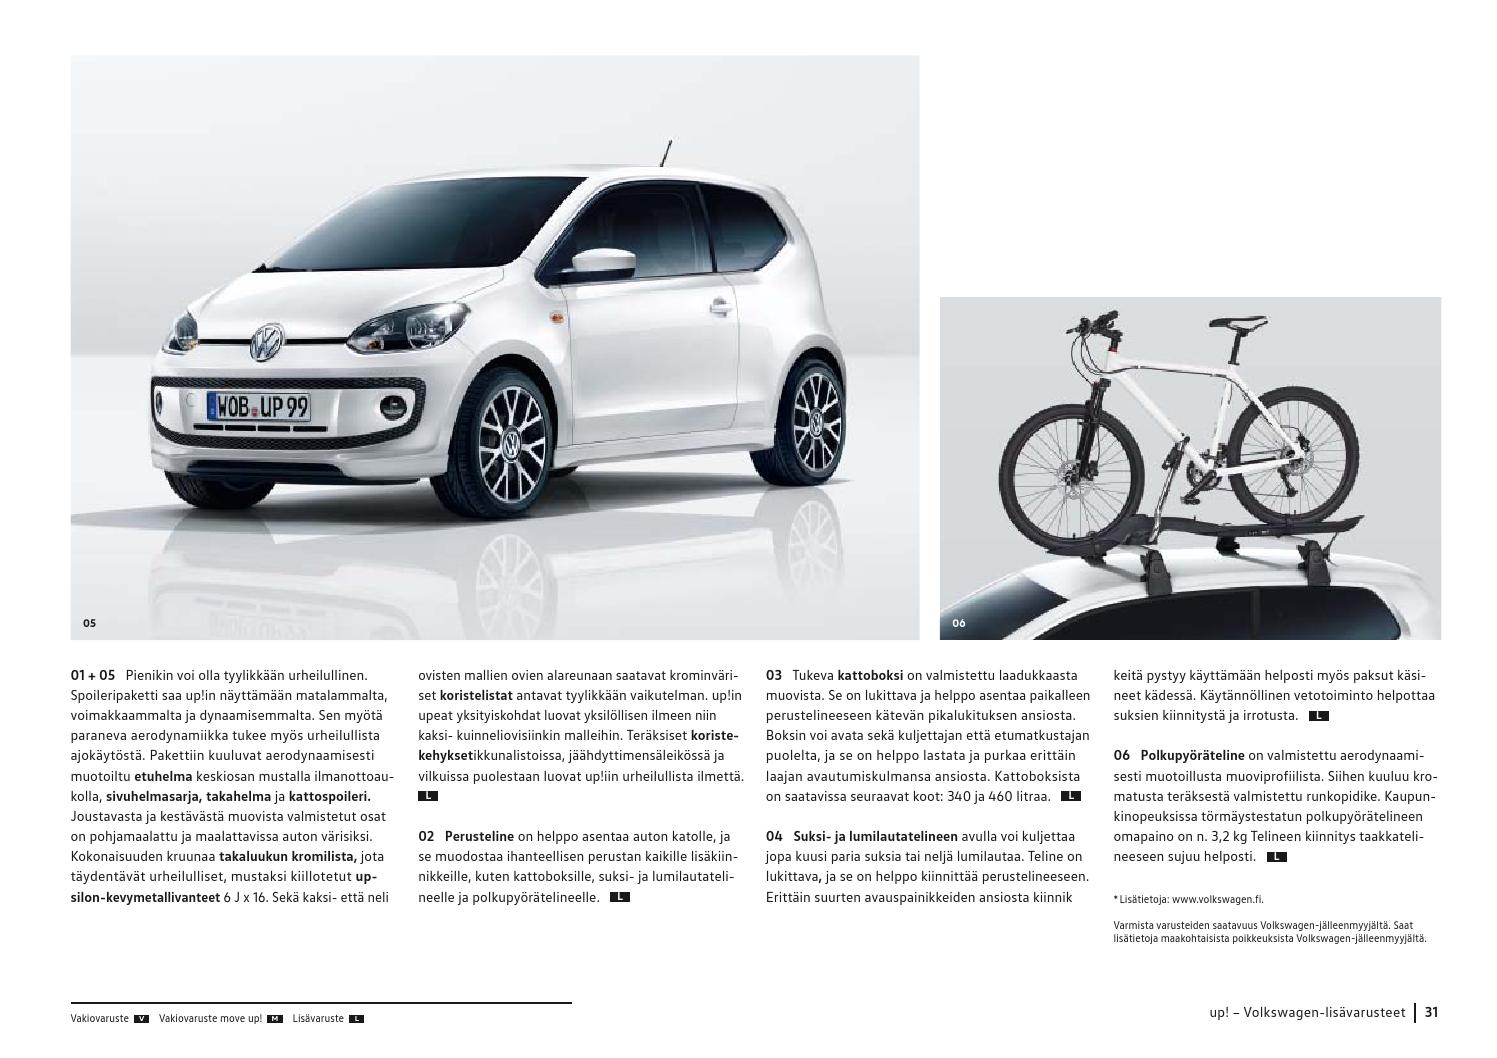  VW Archives - 2016 VW Up! Sales Brochure - Finland